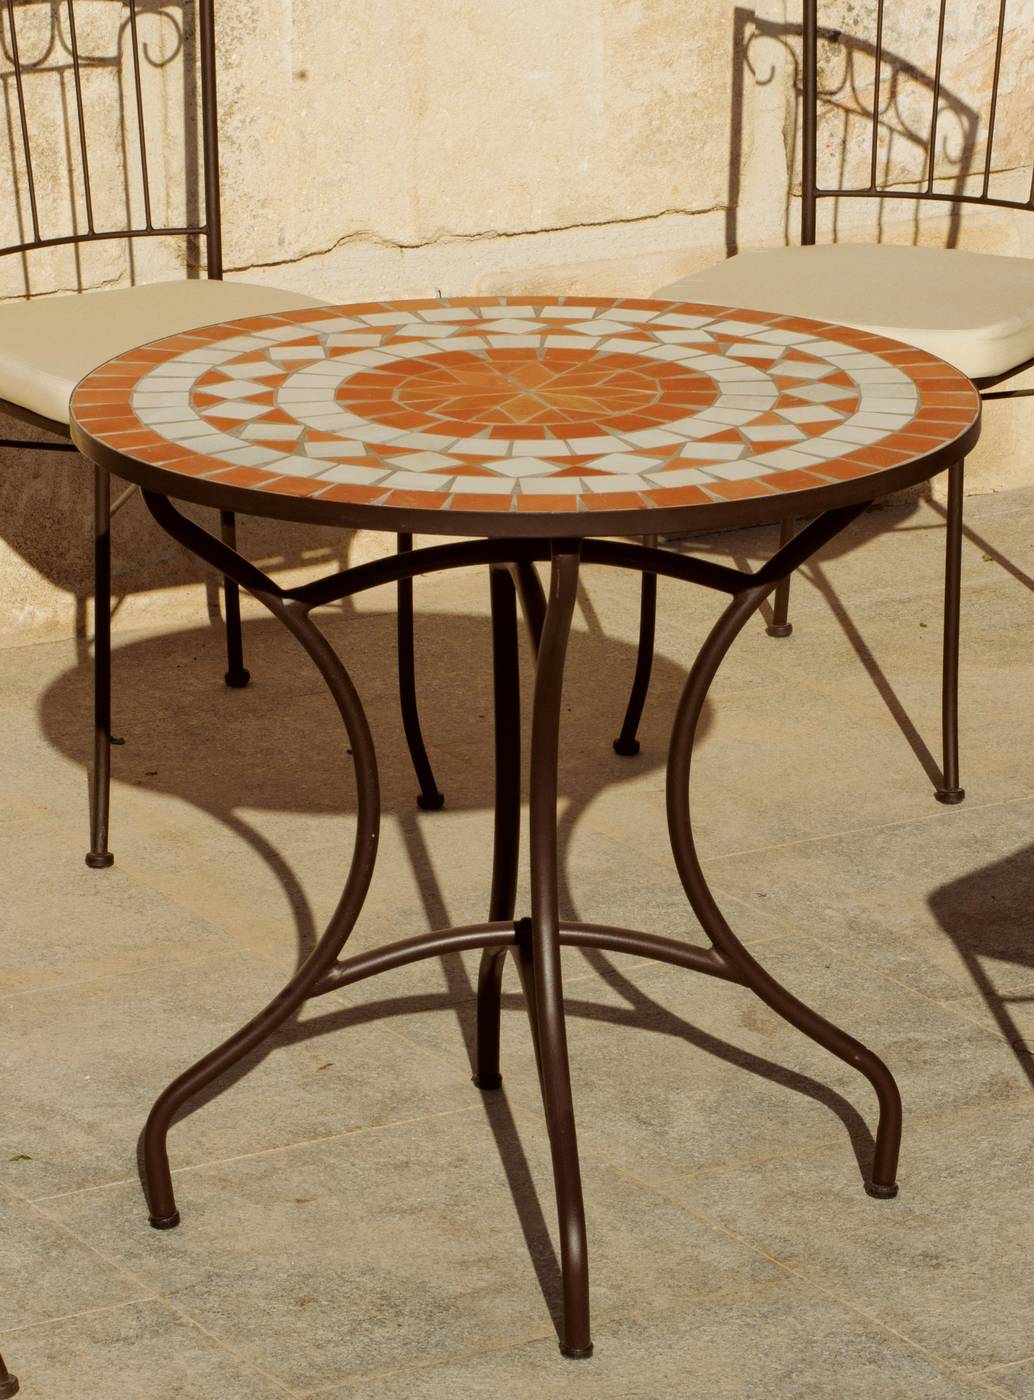 Mesa de acero forjado para jardín o terraza, con tablero mosaico de 75 cm. diámetro.